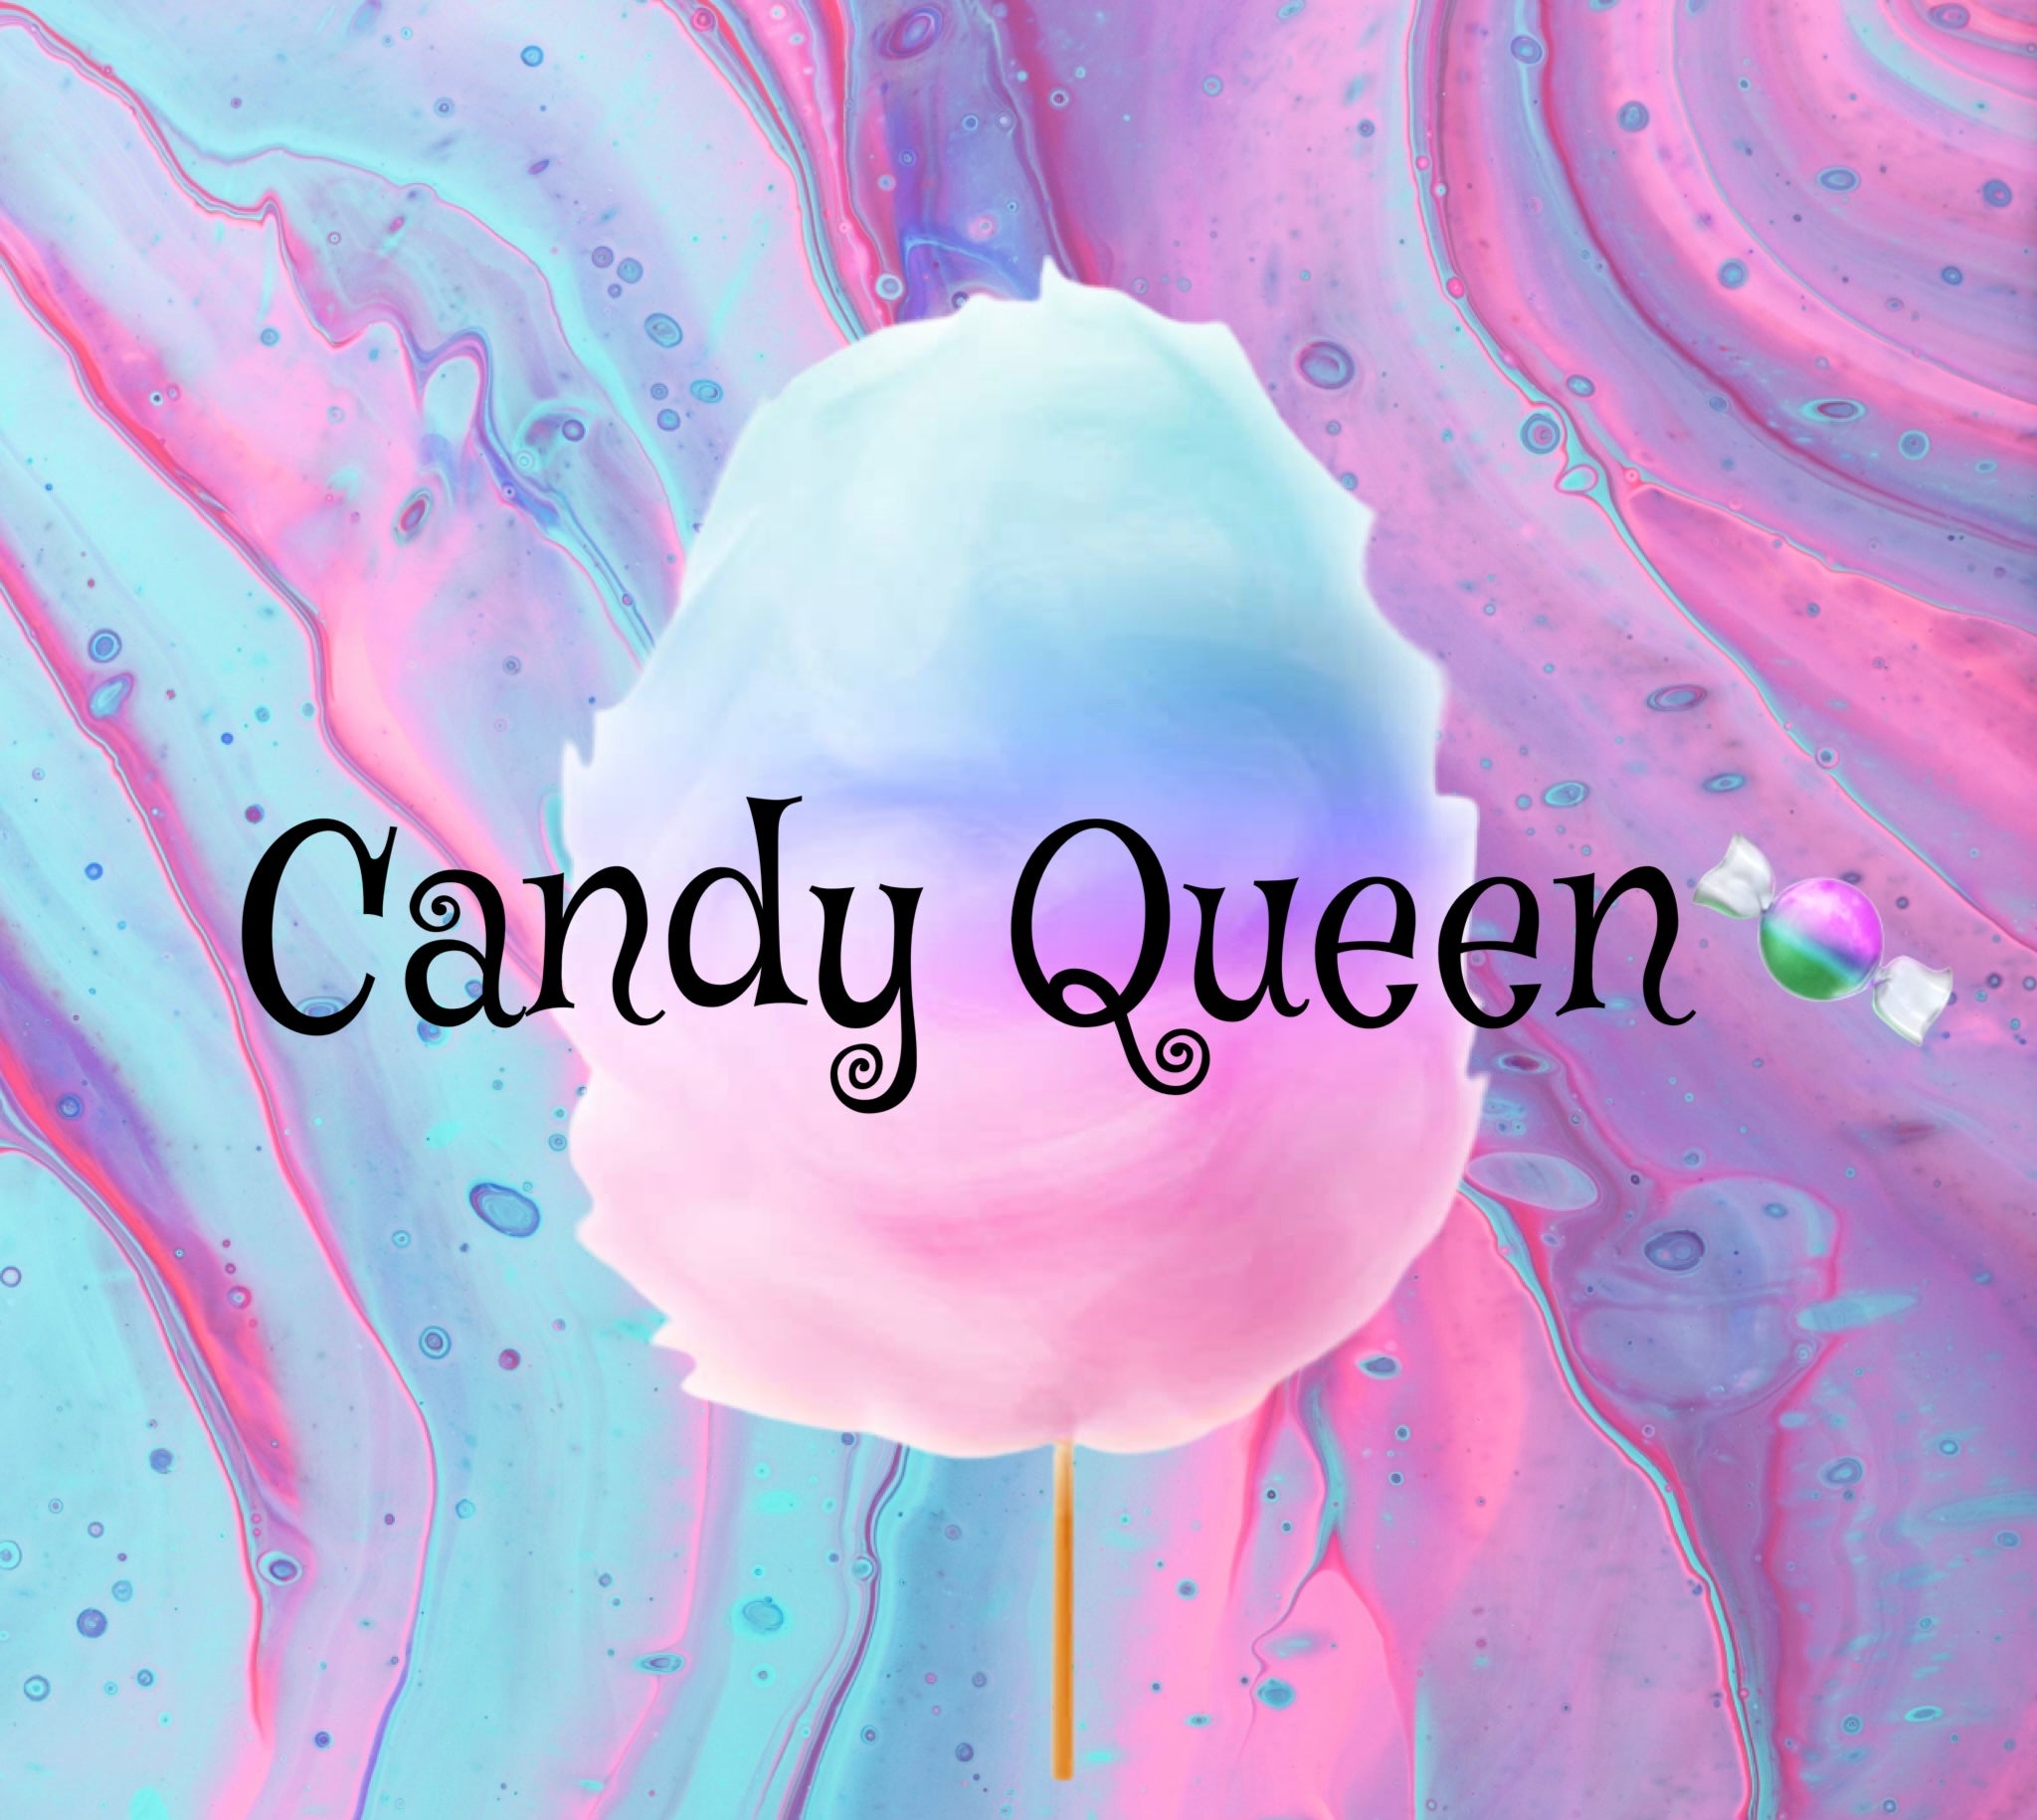 Candy Queen 🍬Fine Fragrance EDT Spray